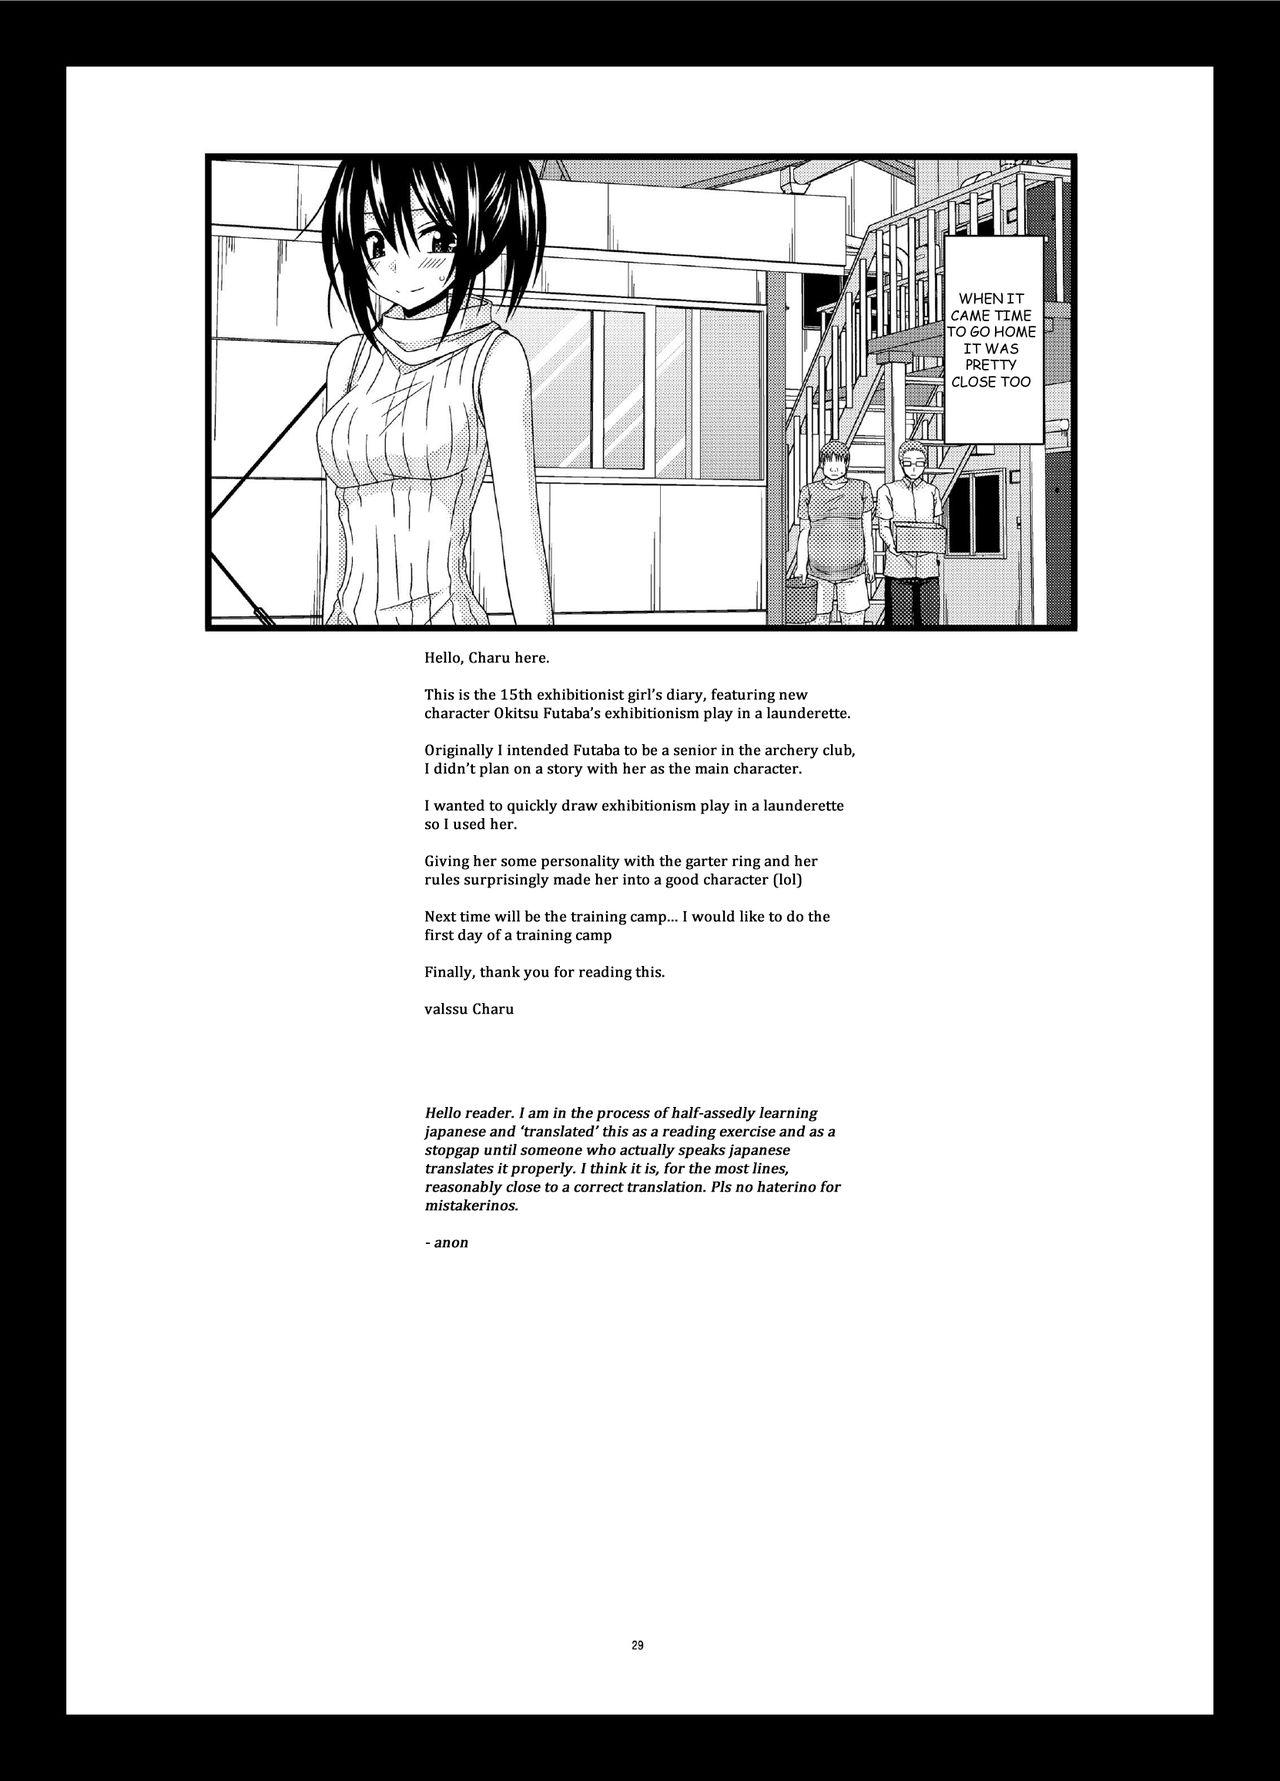 Roshutsu Shoujo Nikki 15 Satsume | Exhibitionist Girl Diary Chapter 15 28